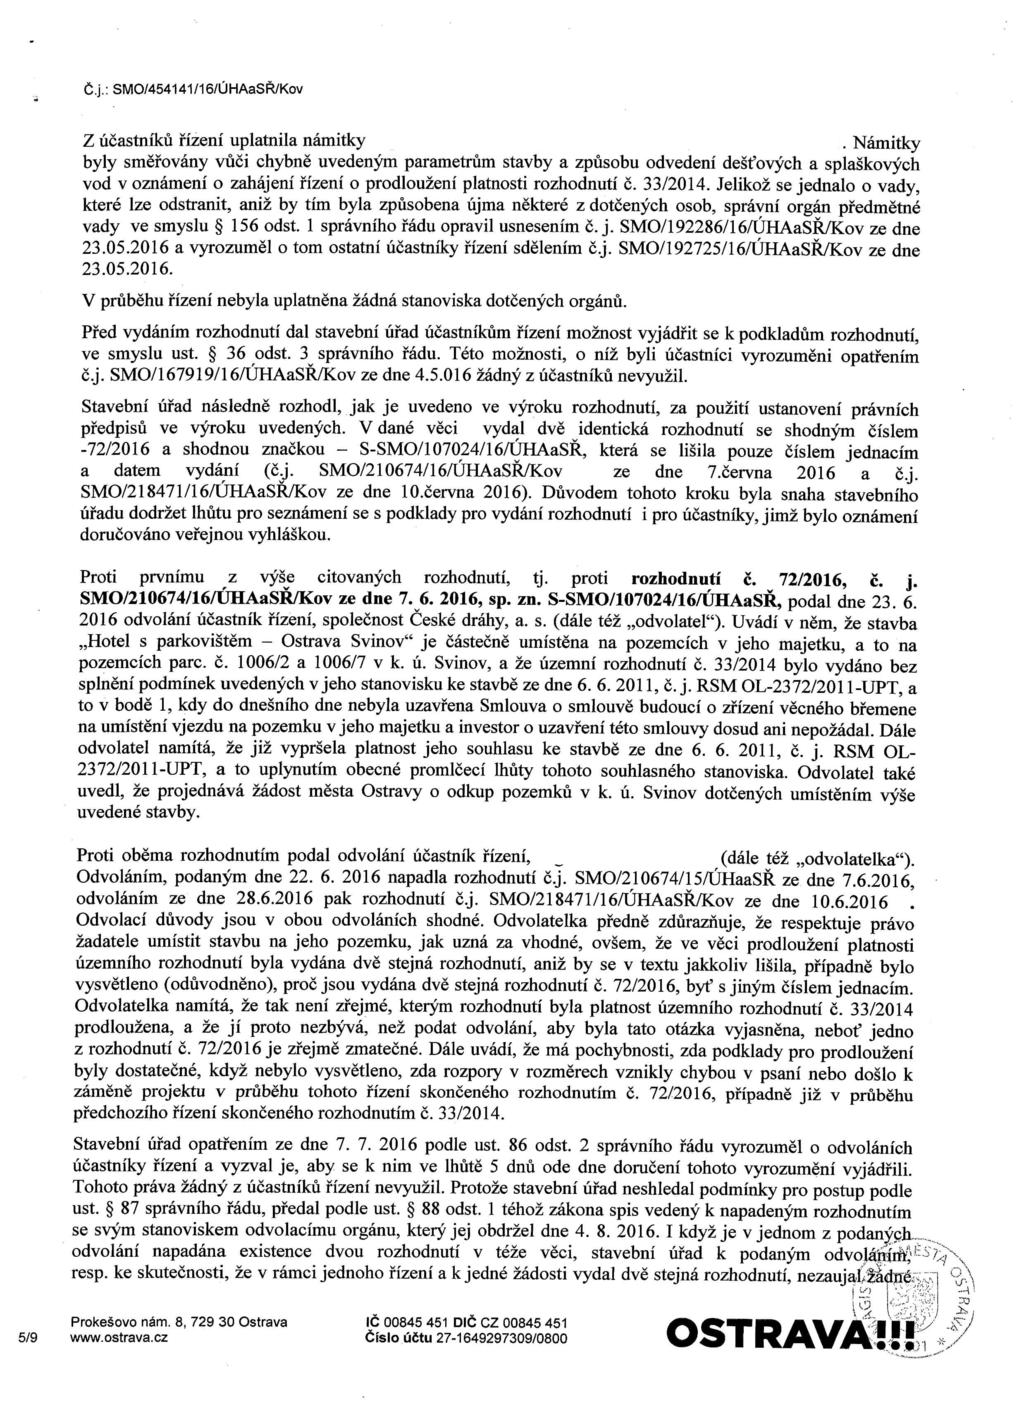 C.j.: SMO/454141/16/UHAaSR/Kov Z ucastniku fizeni uplatnila namitky.